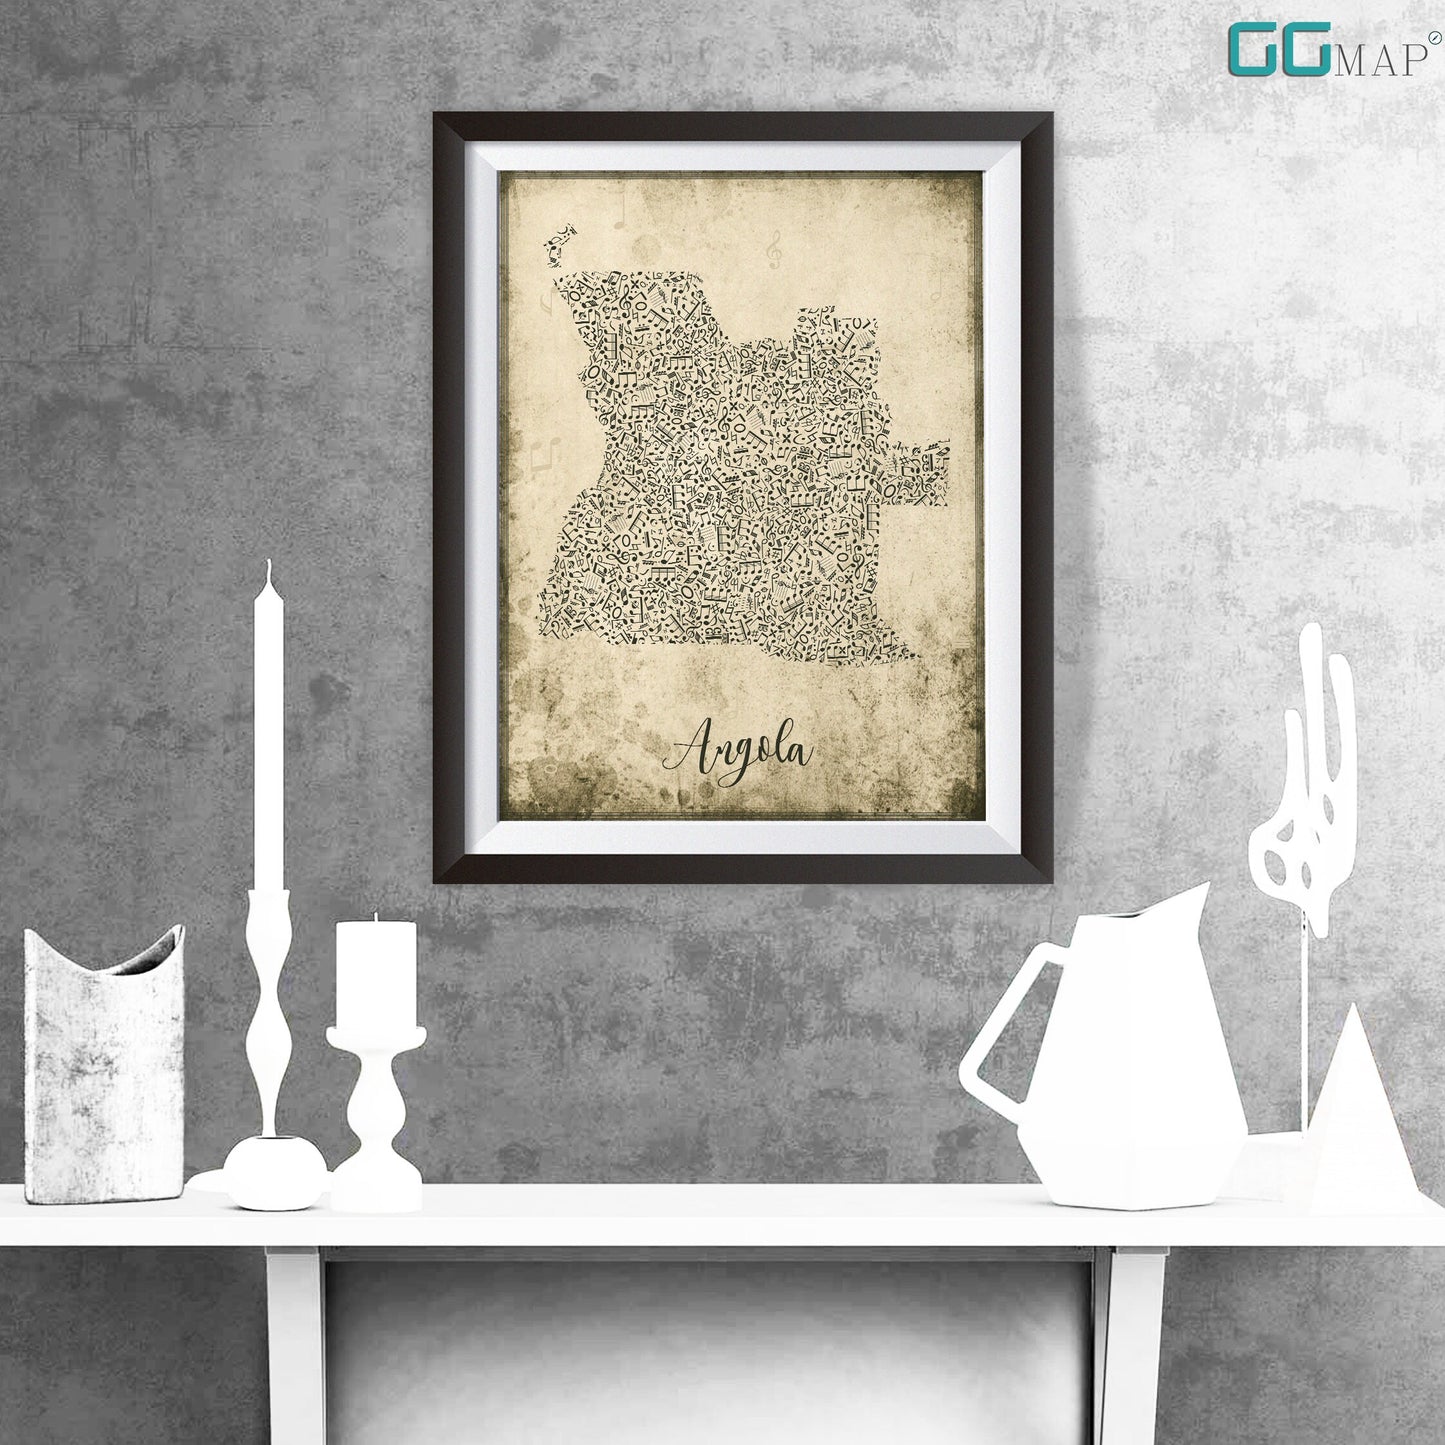 ANGOLA map - Angola Music map - Travel poster - Home Decor - Wall decor - Office map - Angola gift - GGmap - Angola poster